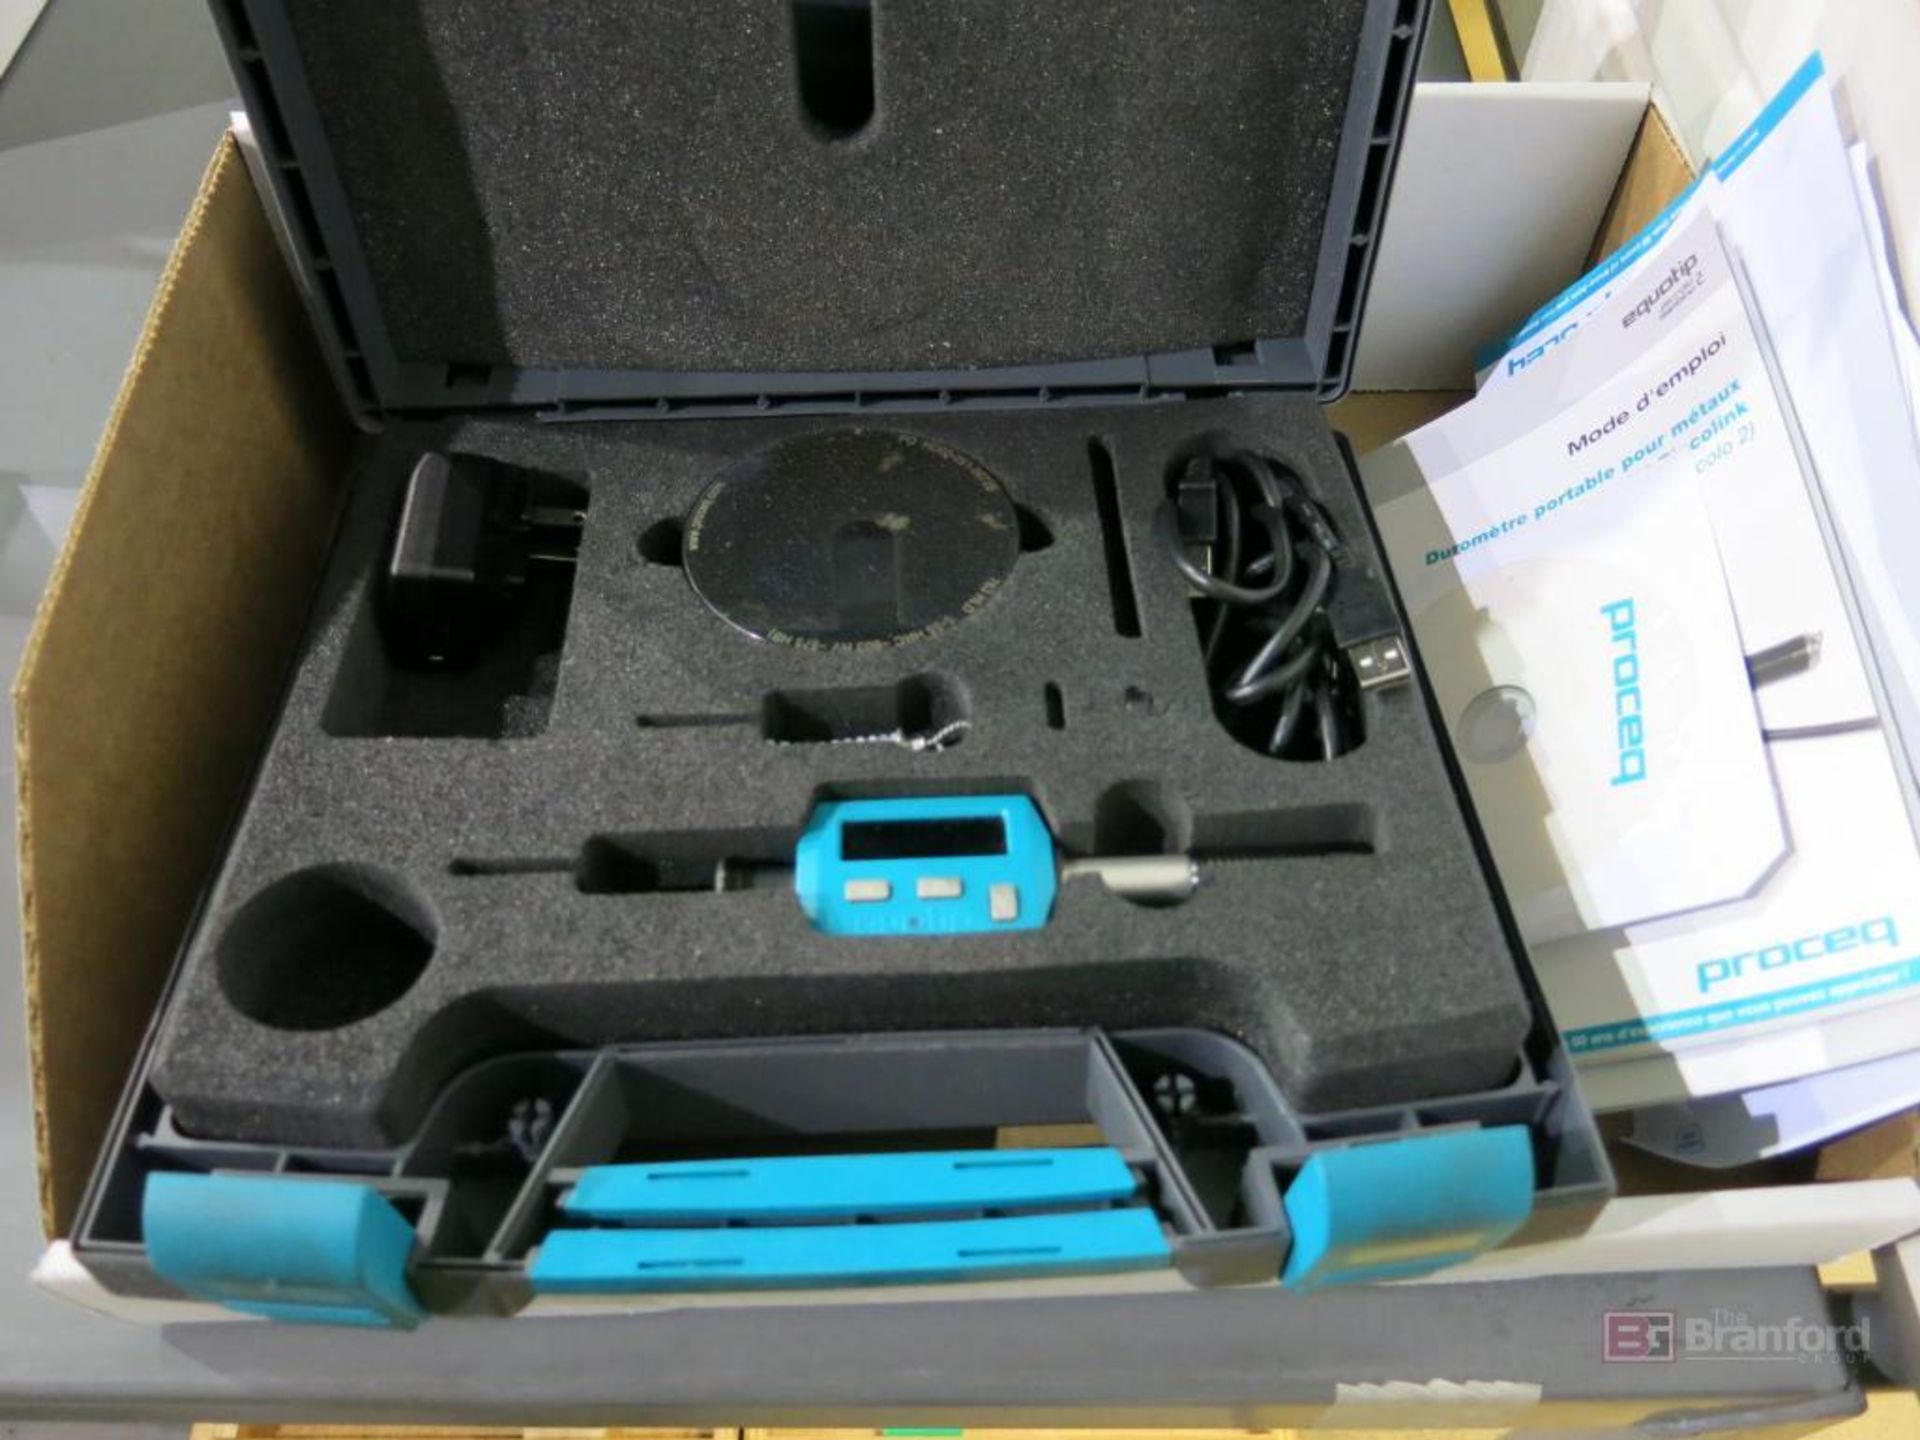 Proceq P/N 352 10 001 Digital Portable Hardness Tester